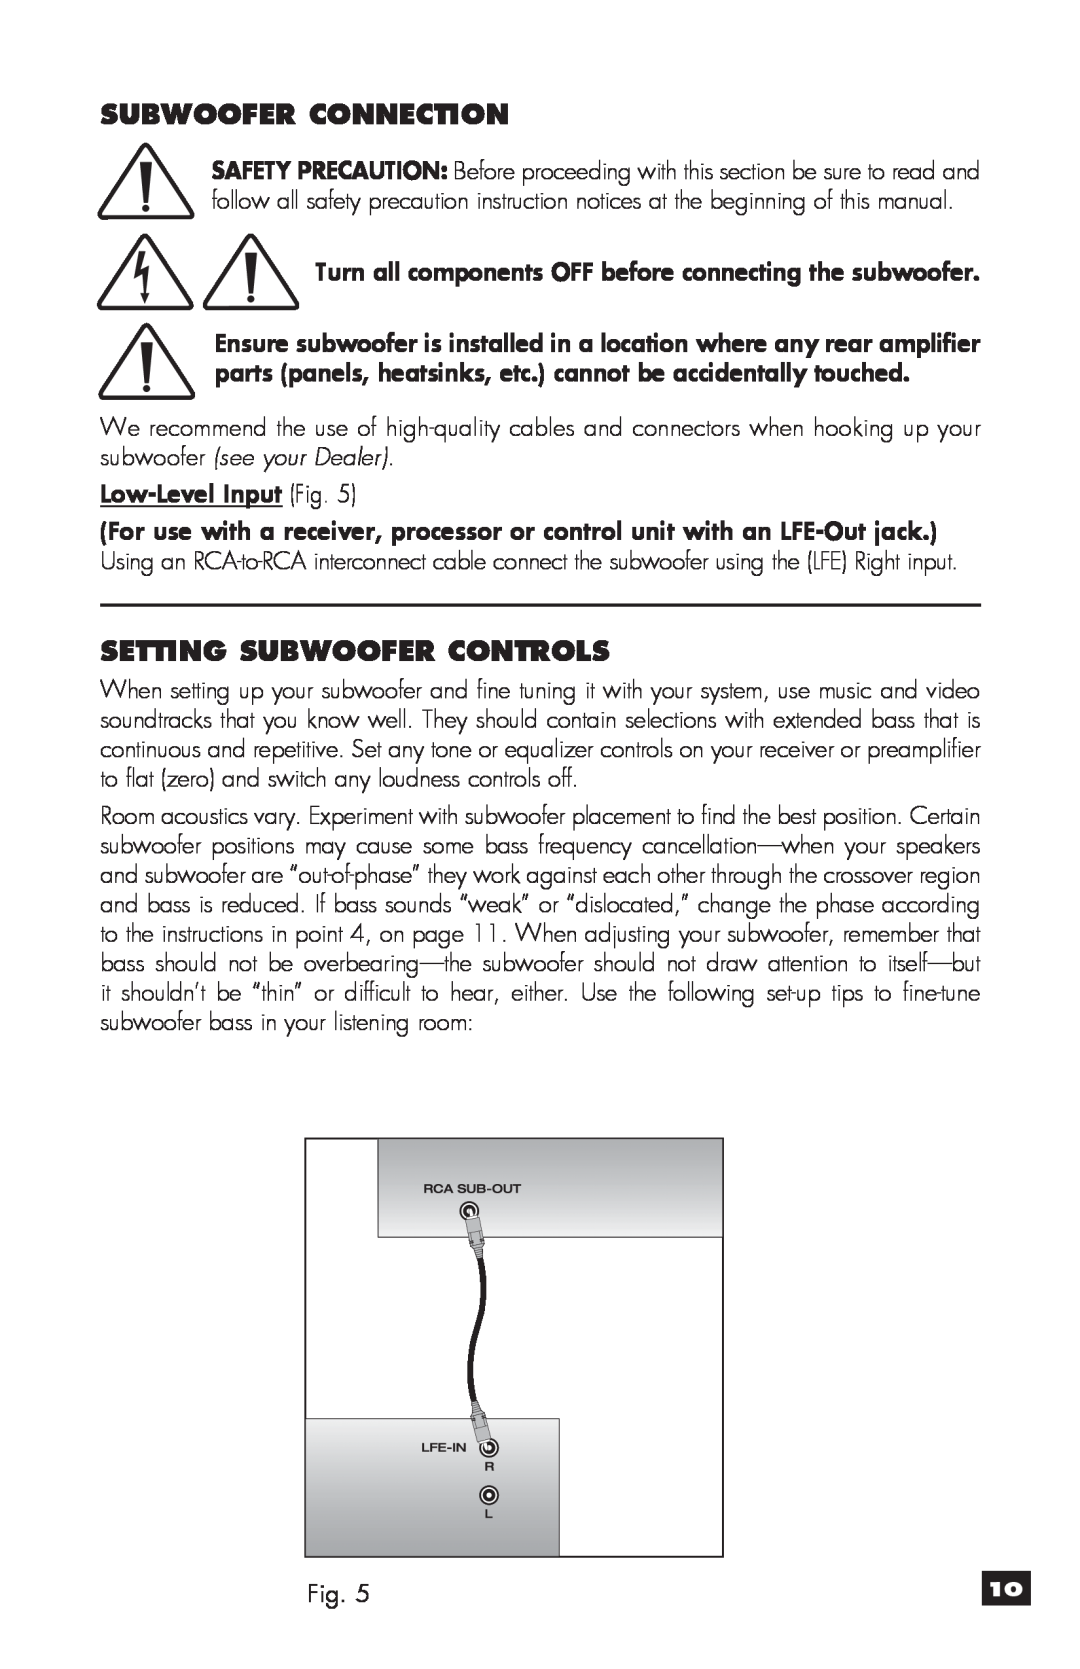 MartinLogan MLT-2 user manual Subwoofer Connection, Setting Subwoofer Controls, Low-LevelInputFig 